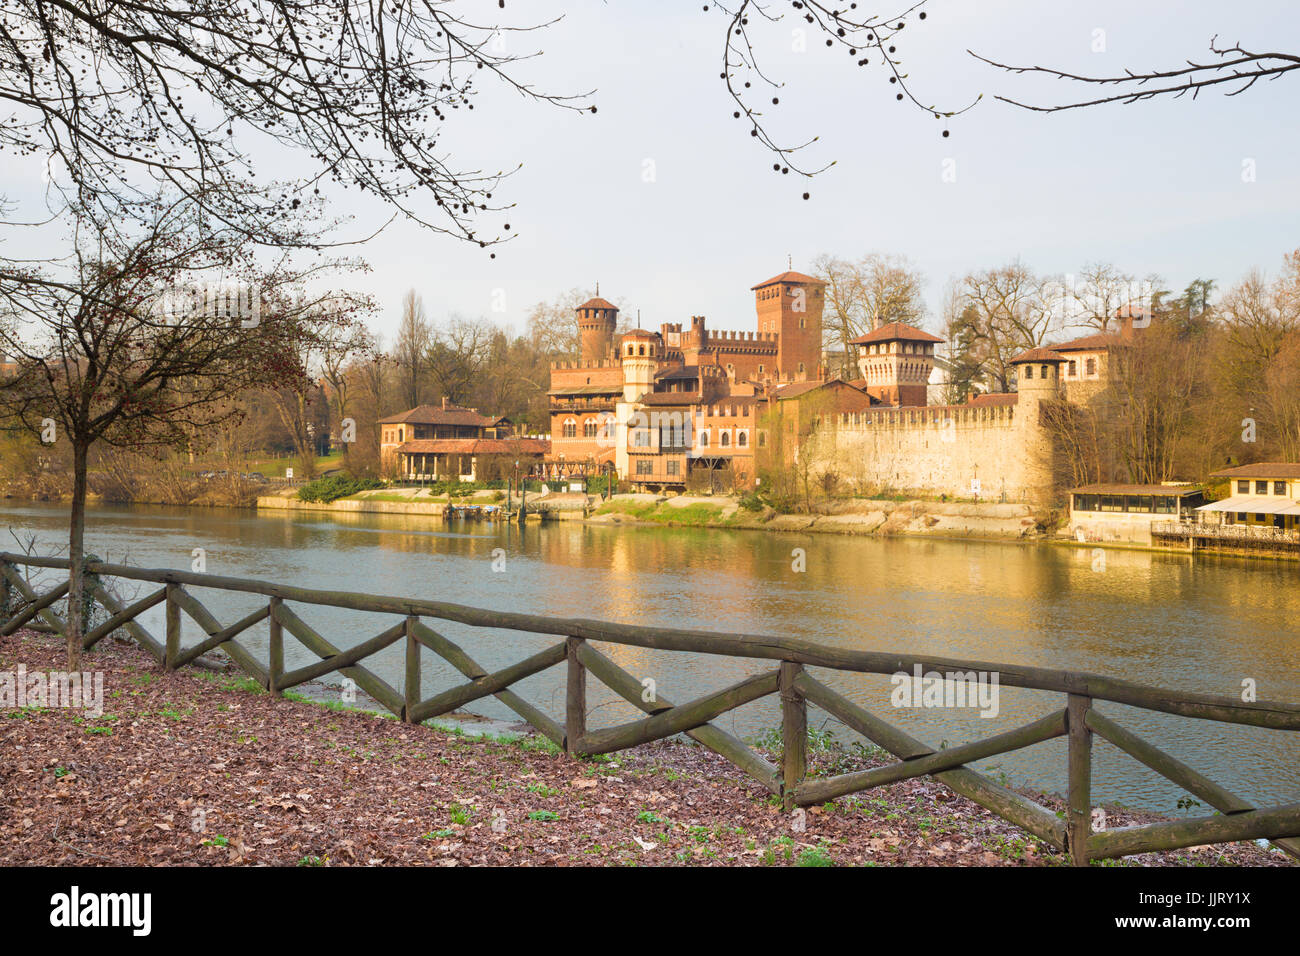 Turin - The panorama of Borgo Medievale castle. Stock Photo